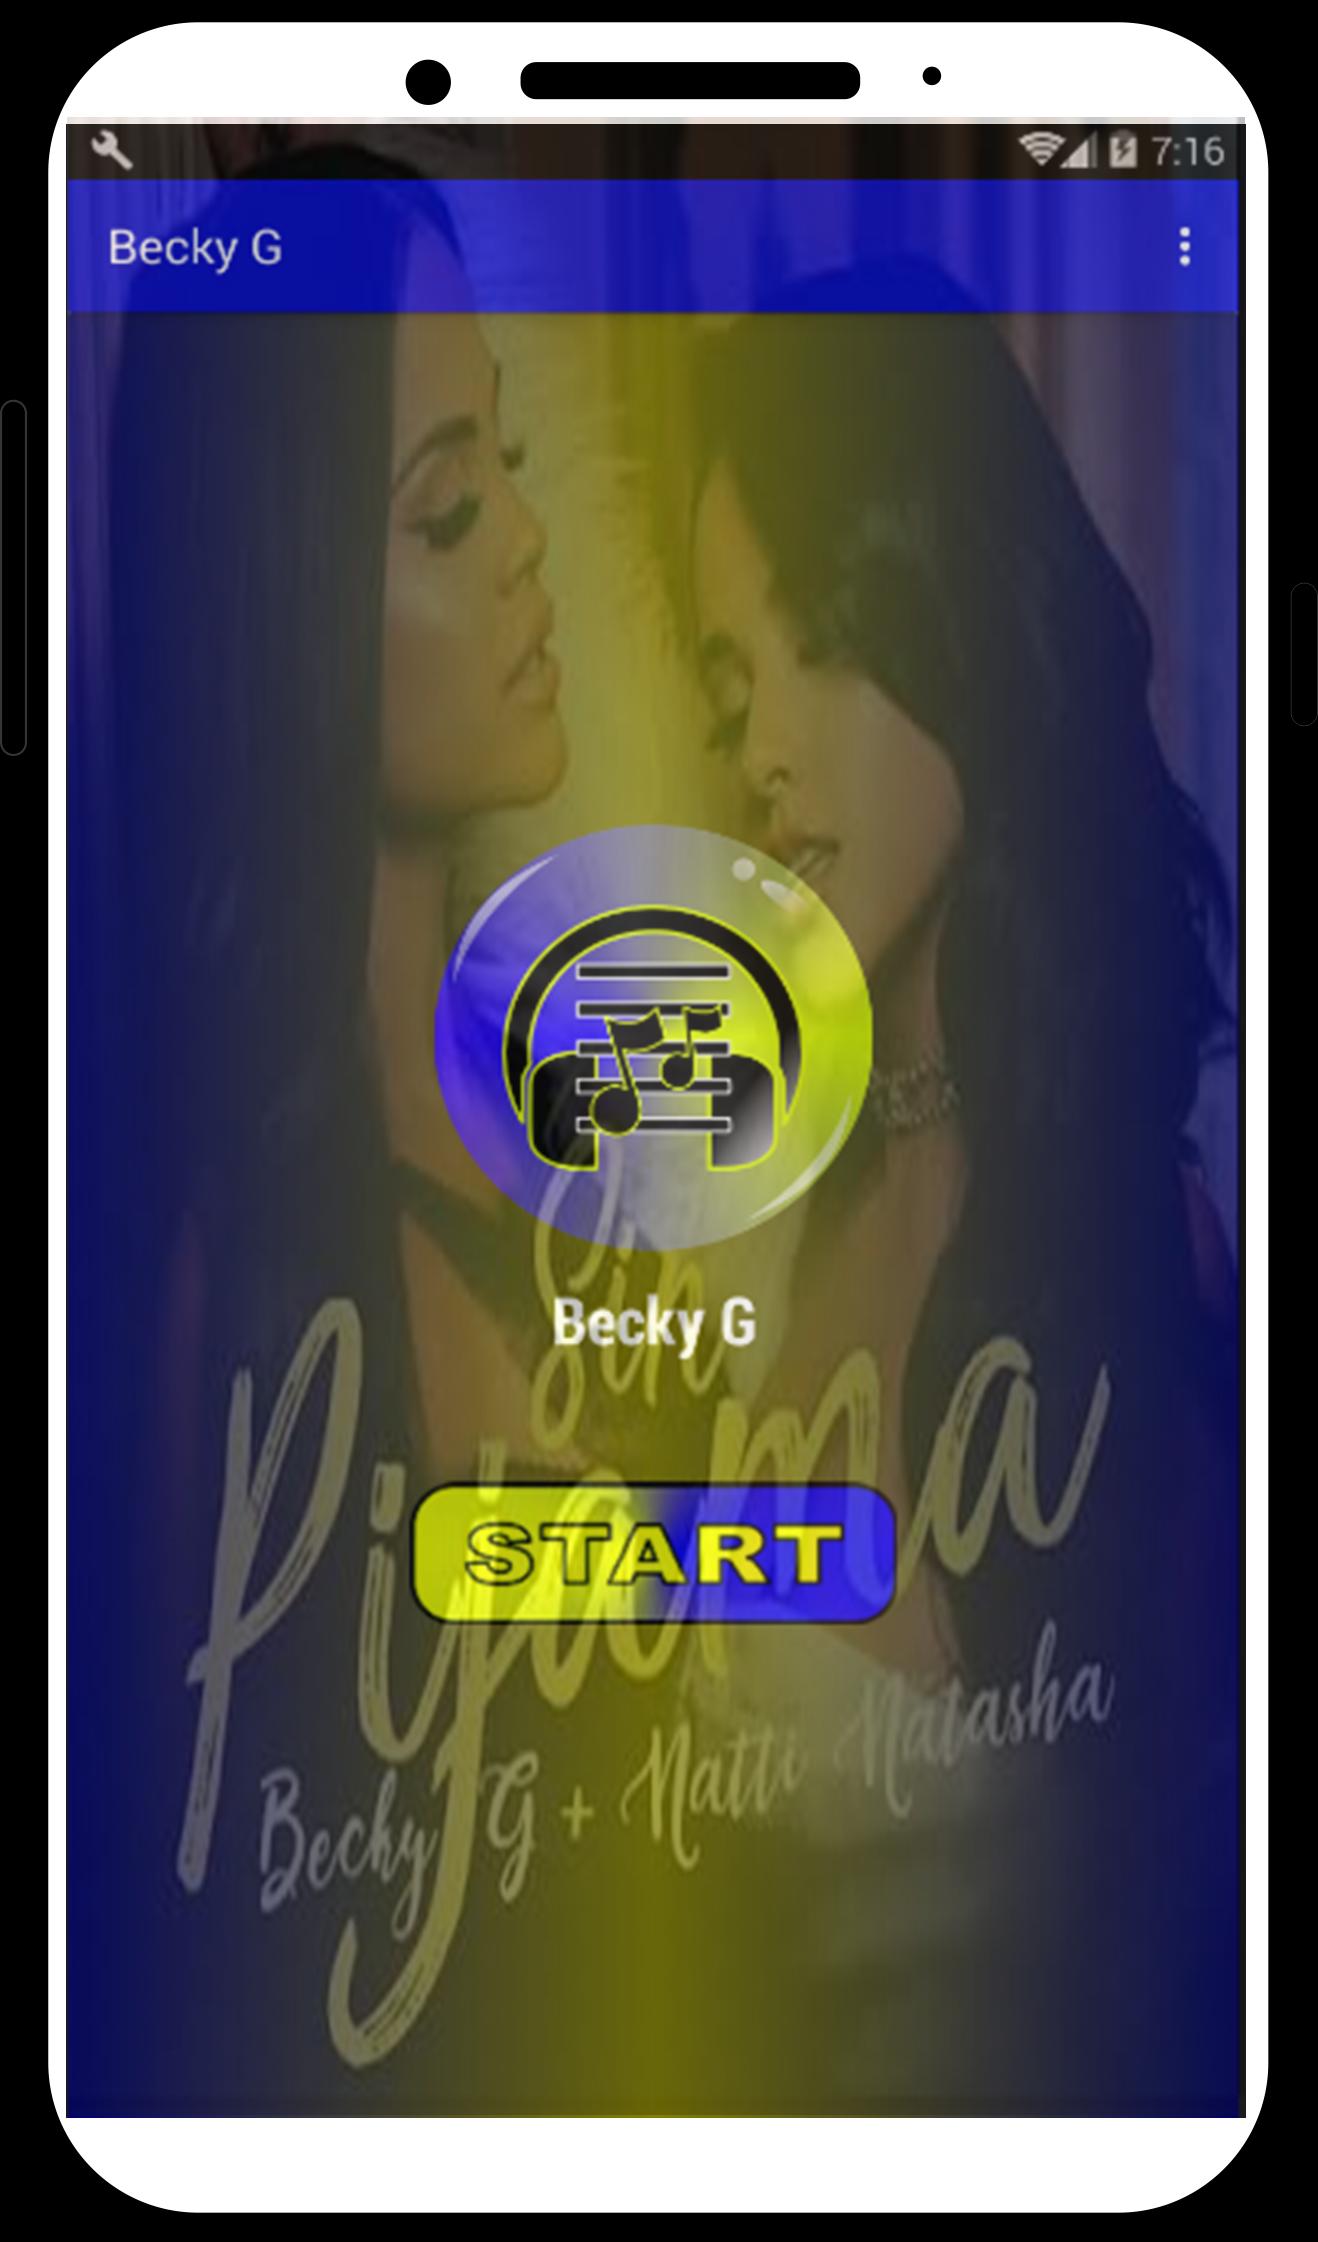 Descarga de APK de Becky G, Natti Natasha - Sin Pijama Nueva Musica para  Android